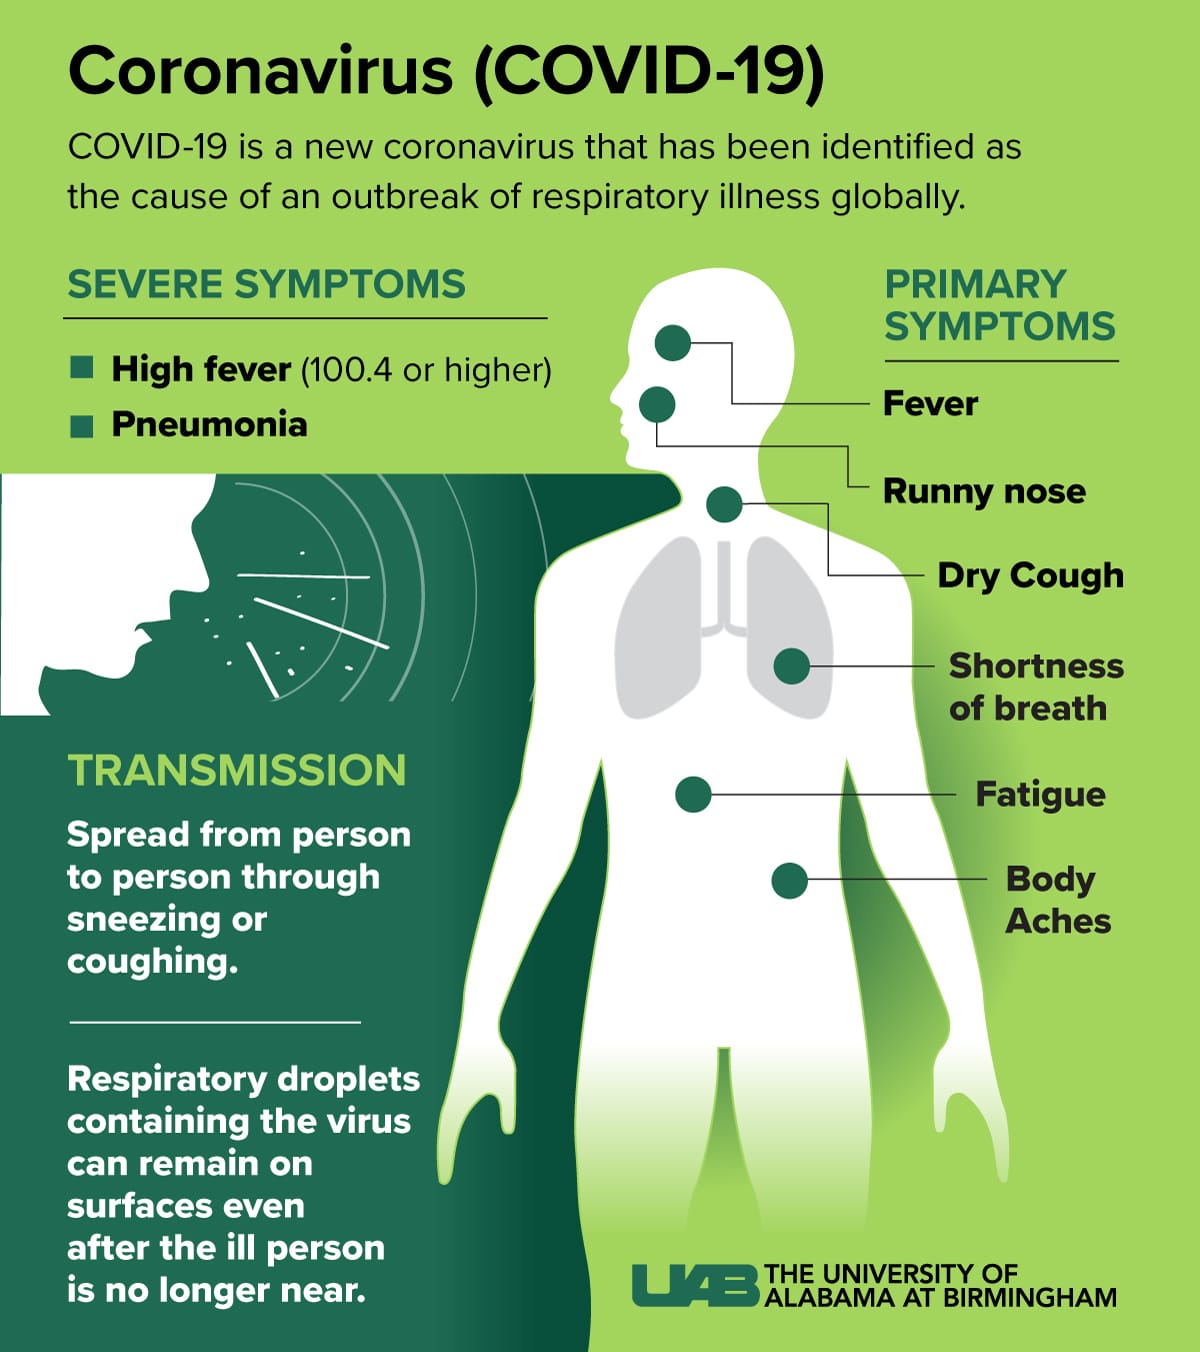 About Coronavirus (COVID